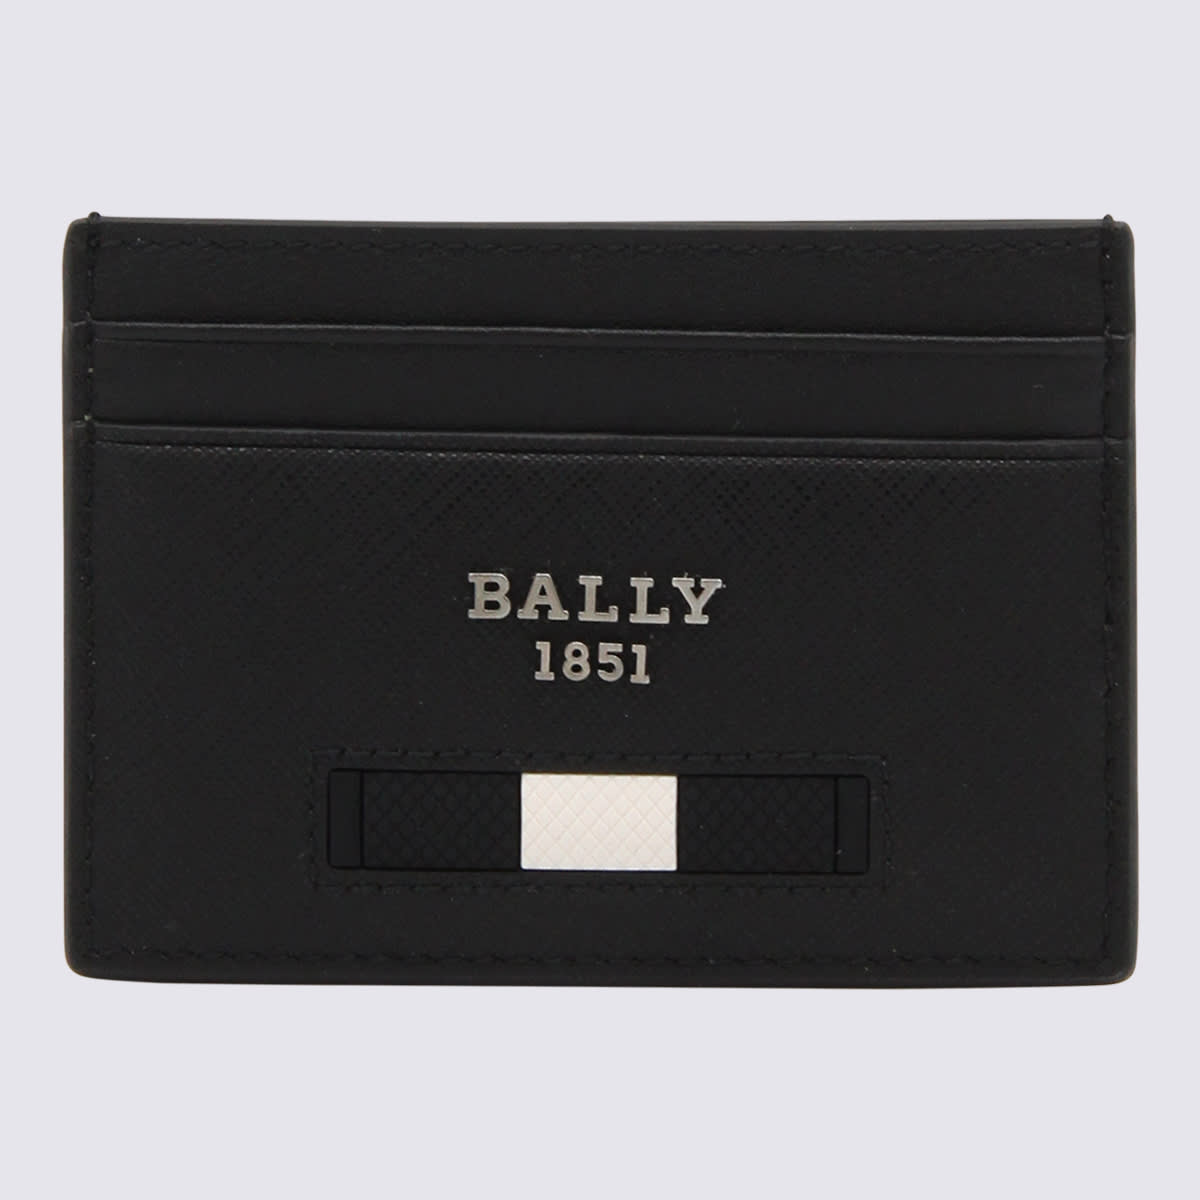 Bally Black Leather Cardholder